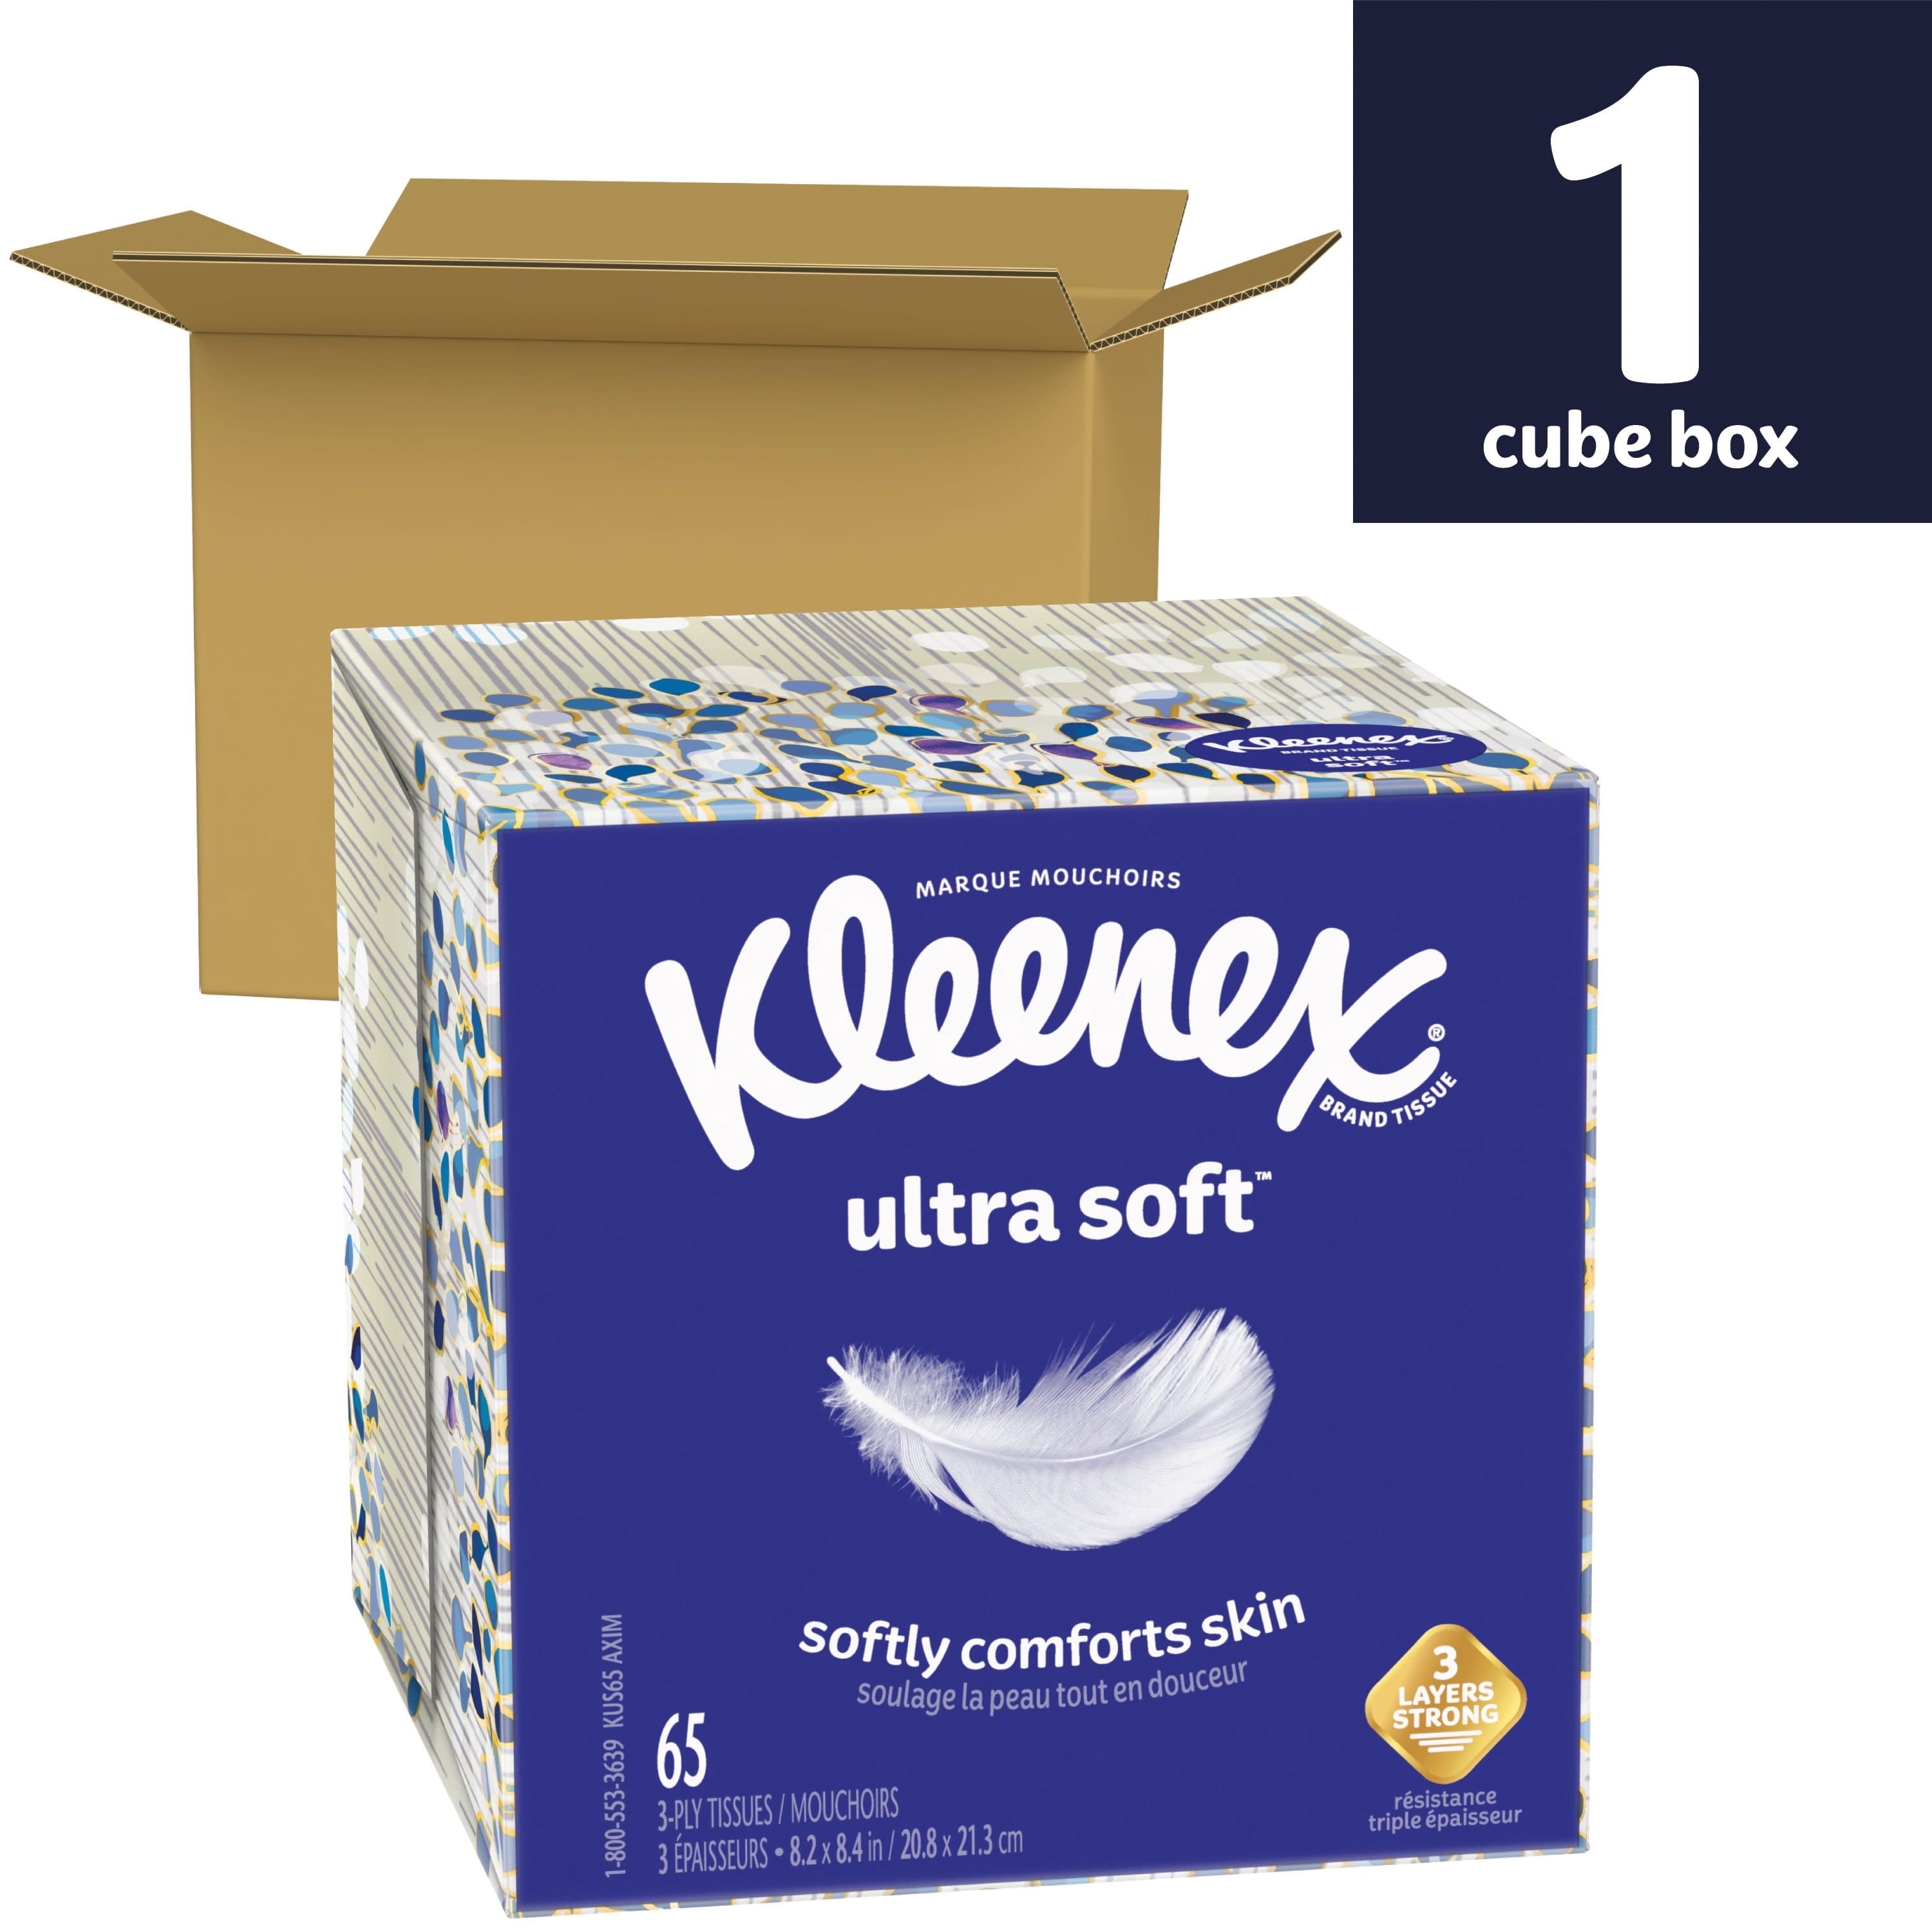 Lot of 3 Kleenex ultra soft facial tissue cube 